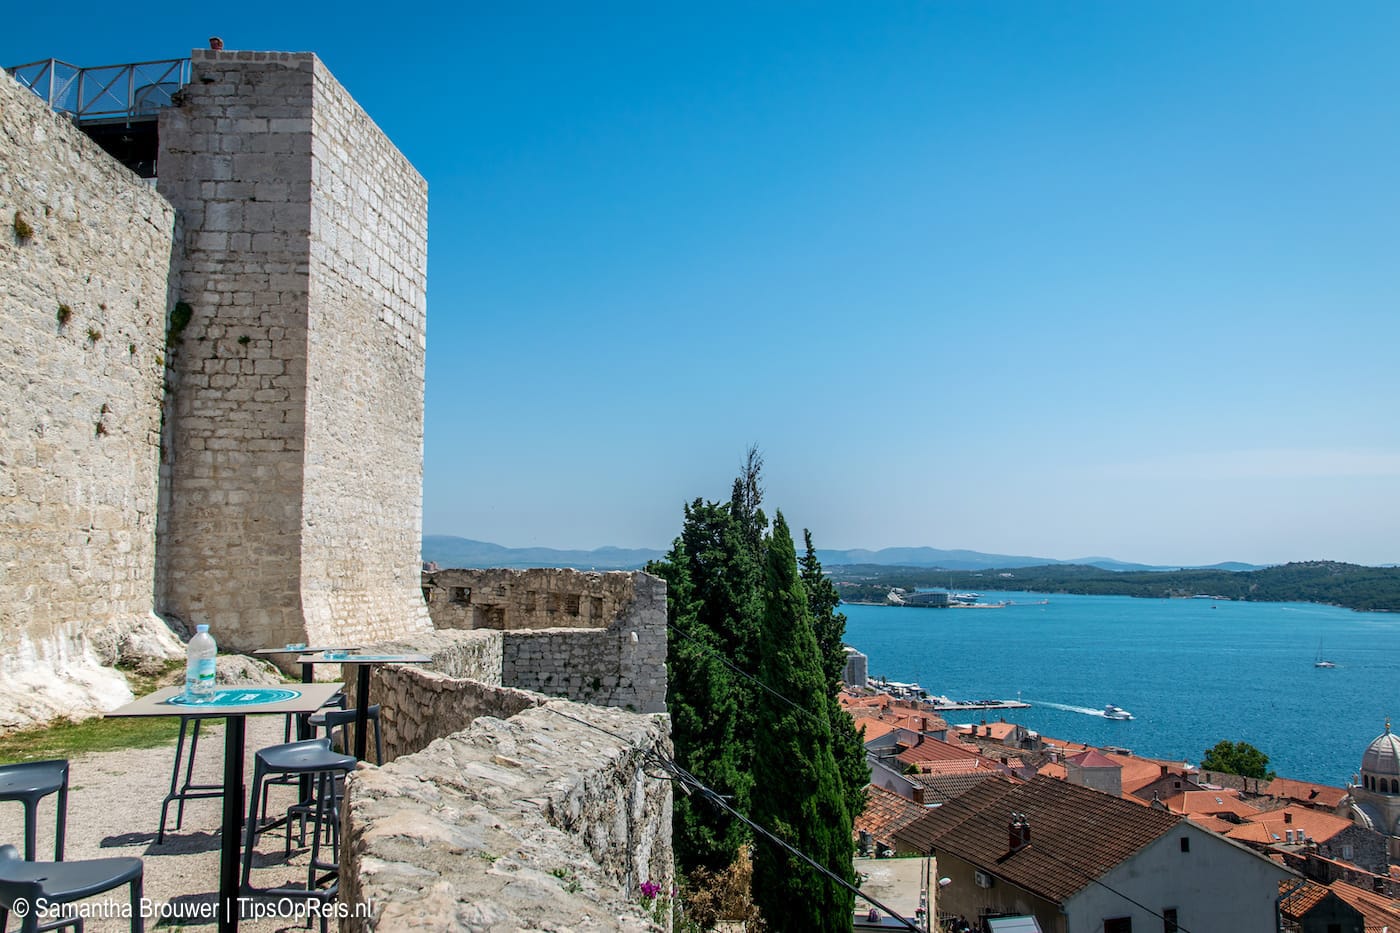 Å ibenik in KroatiÃ«: St. Michael's Fortress